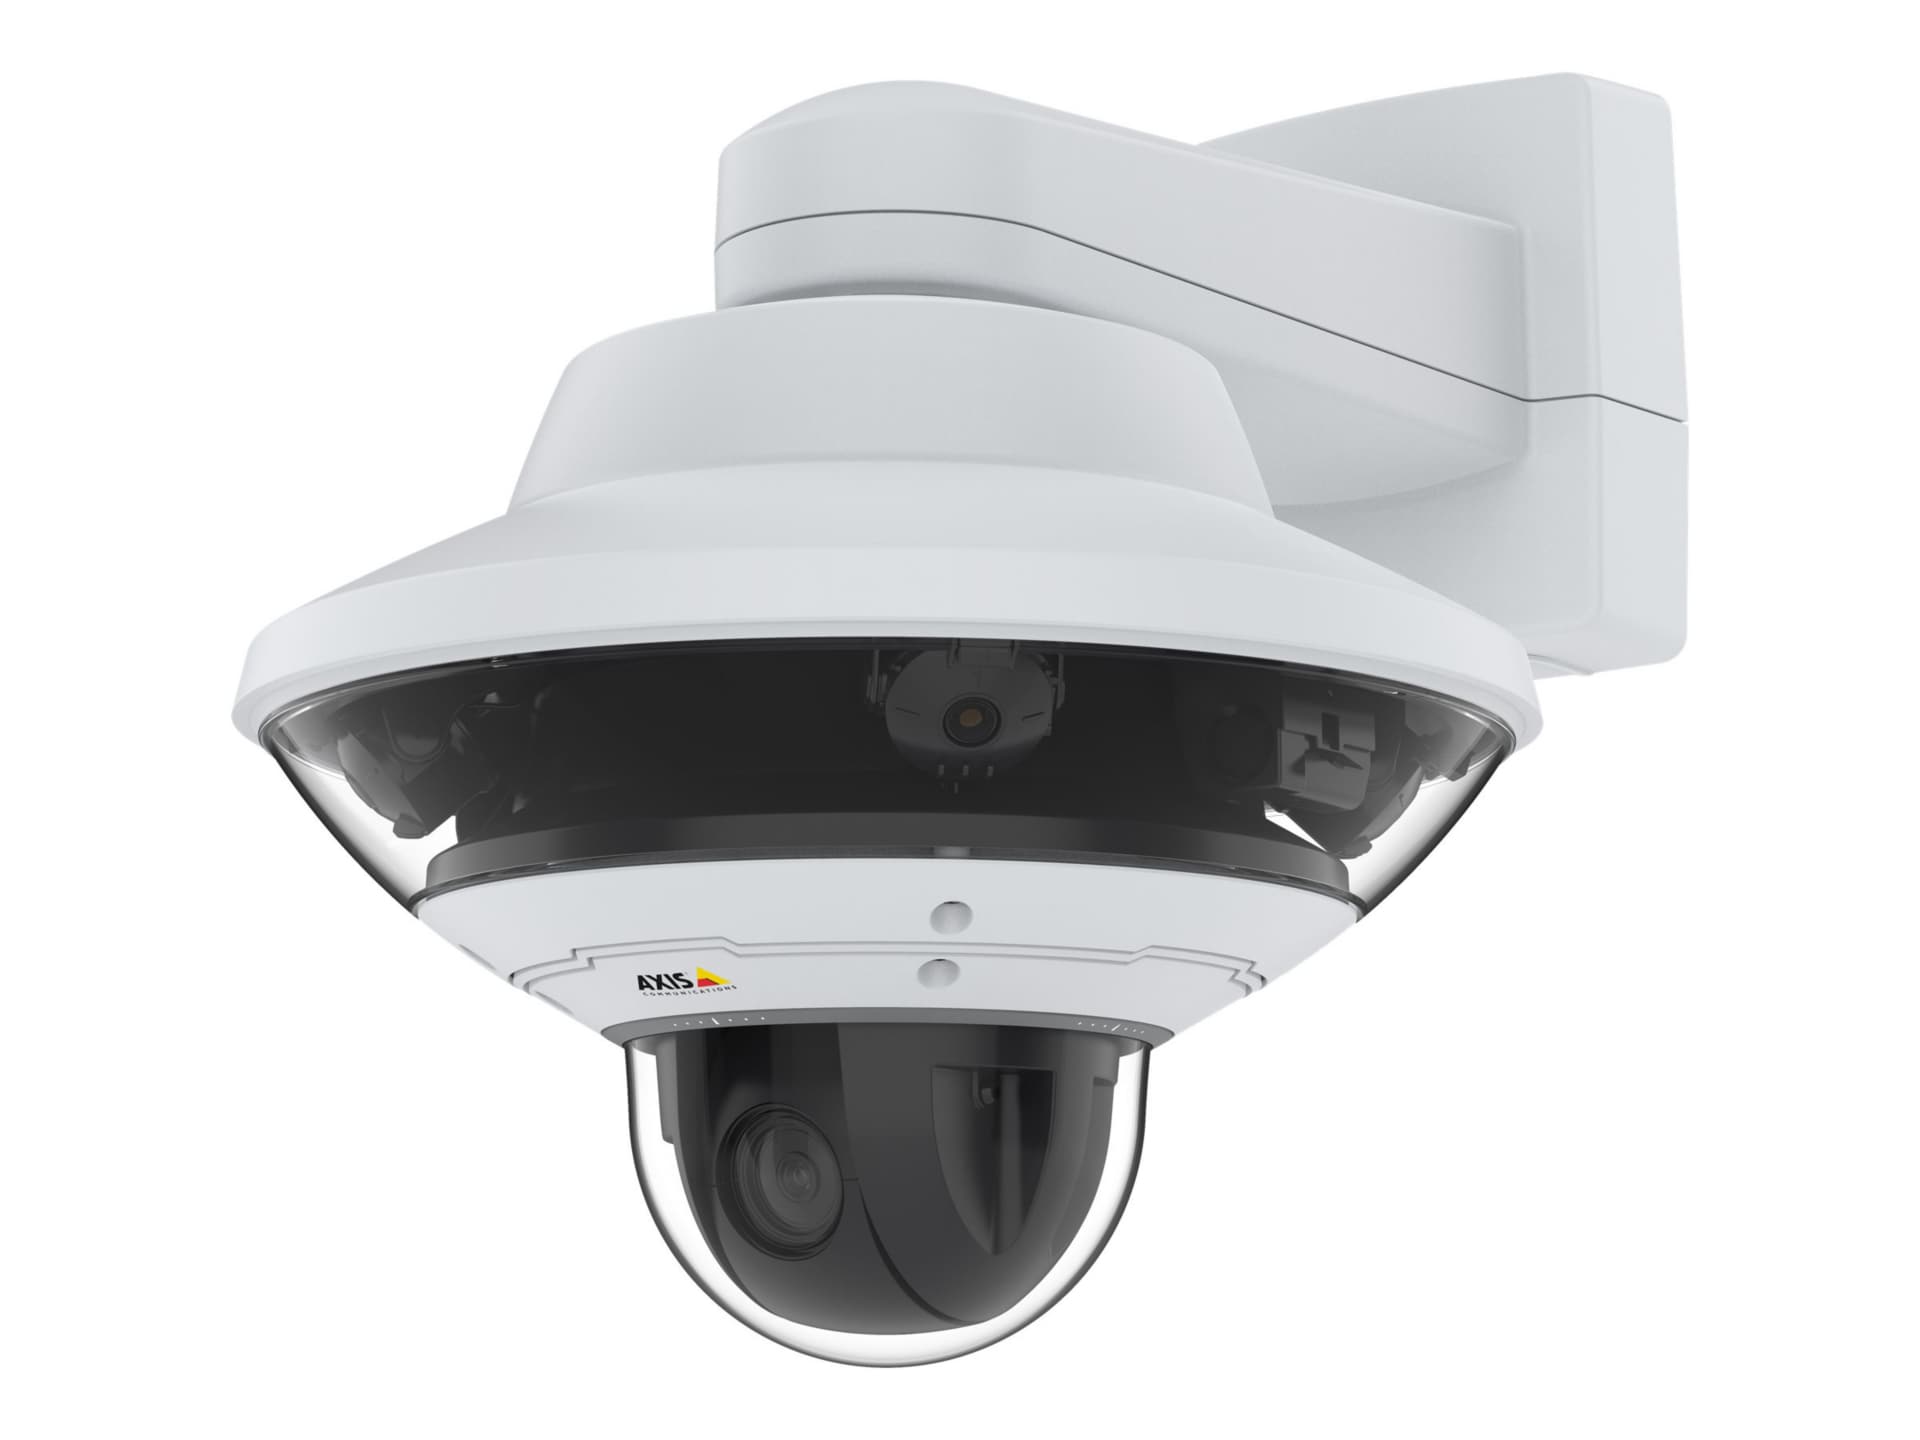 AXIS Q6010-E 60Hz - network surveillance camera - dome